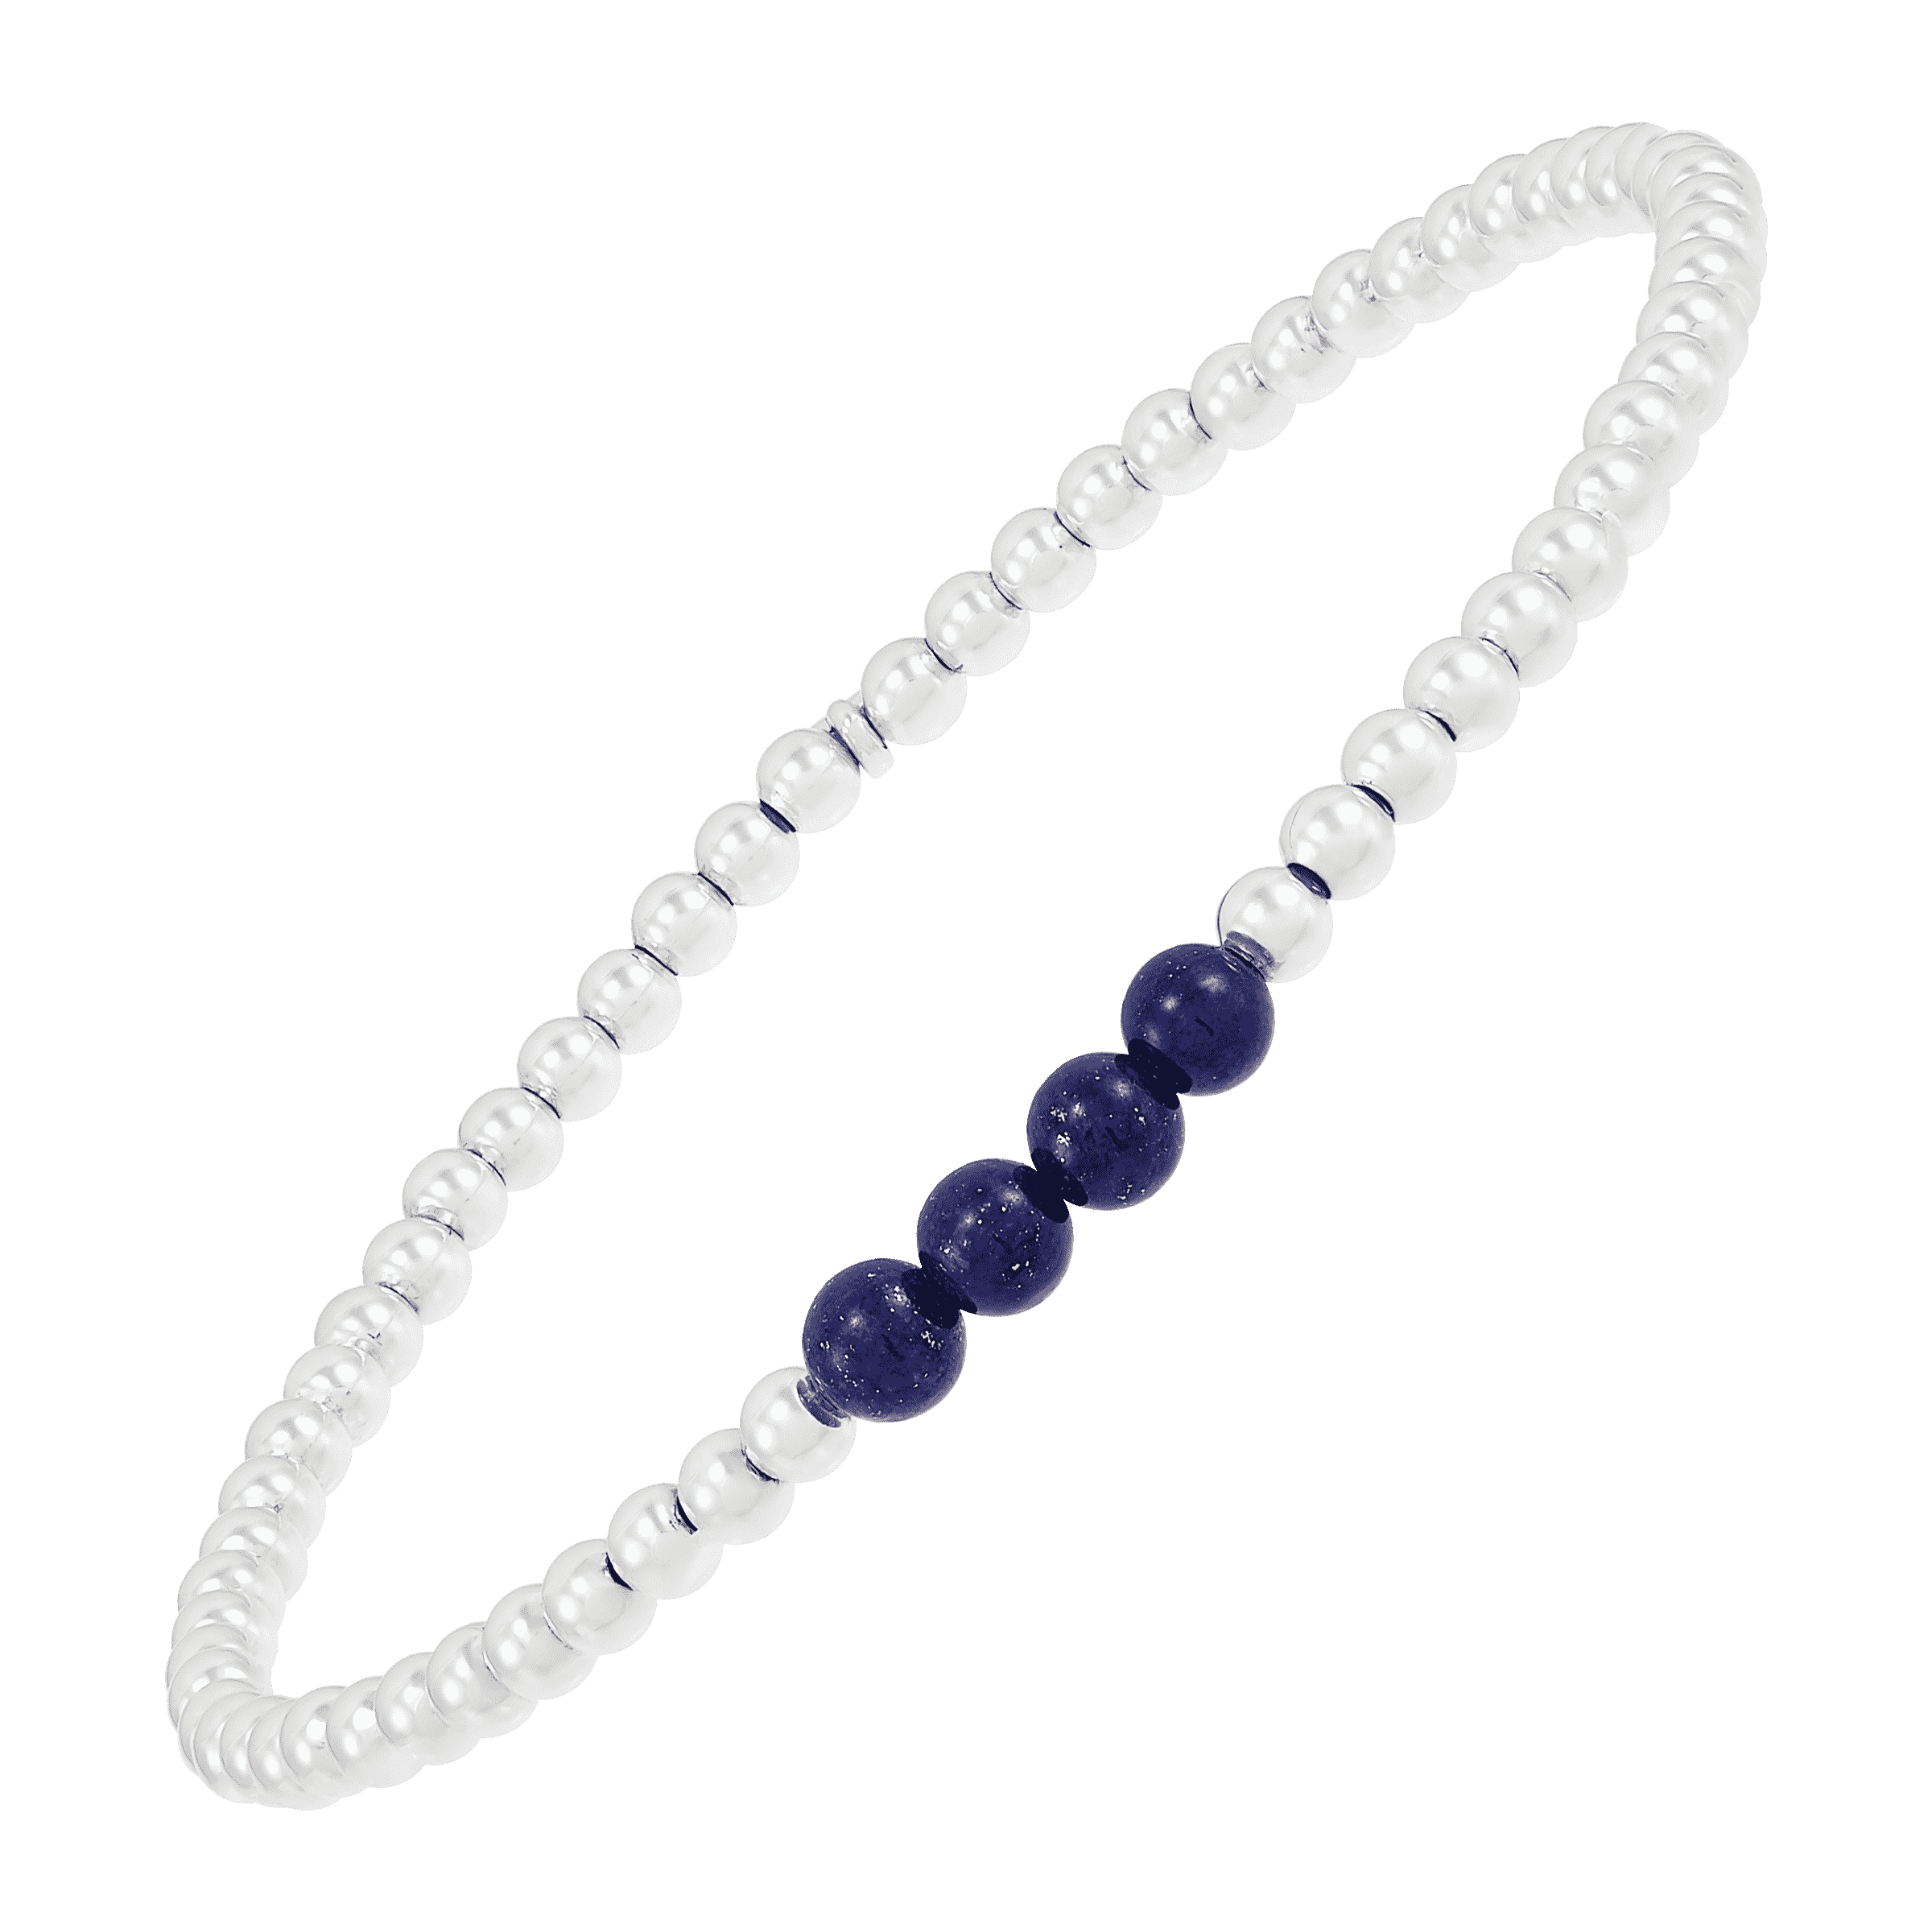 Lapis Lazuli Bracelet Tile-Shaped Bead Stretch phenomenal quality